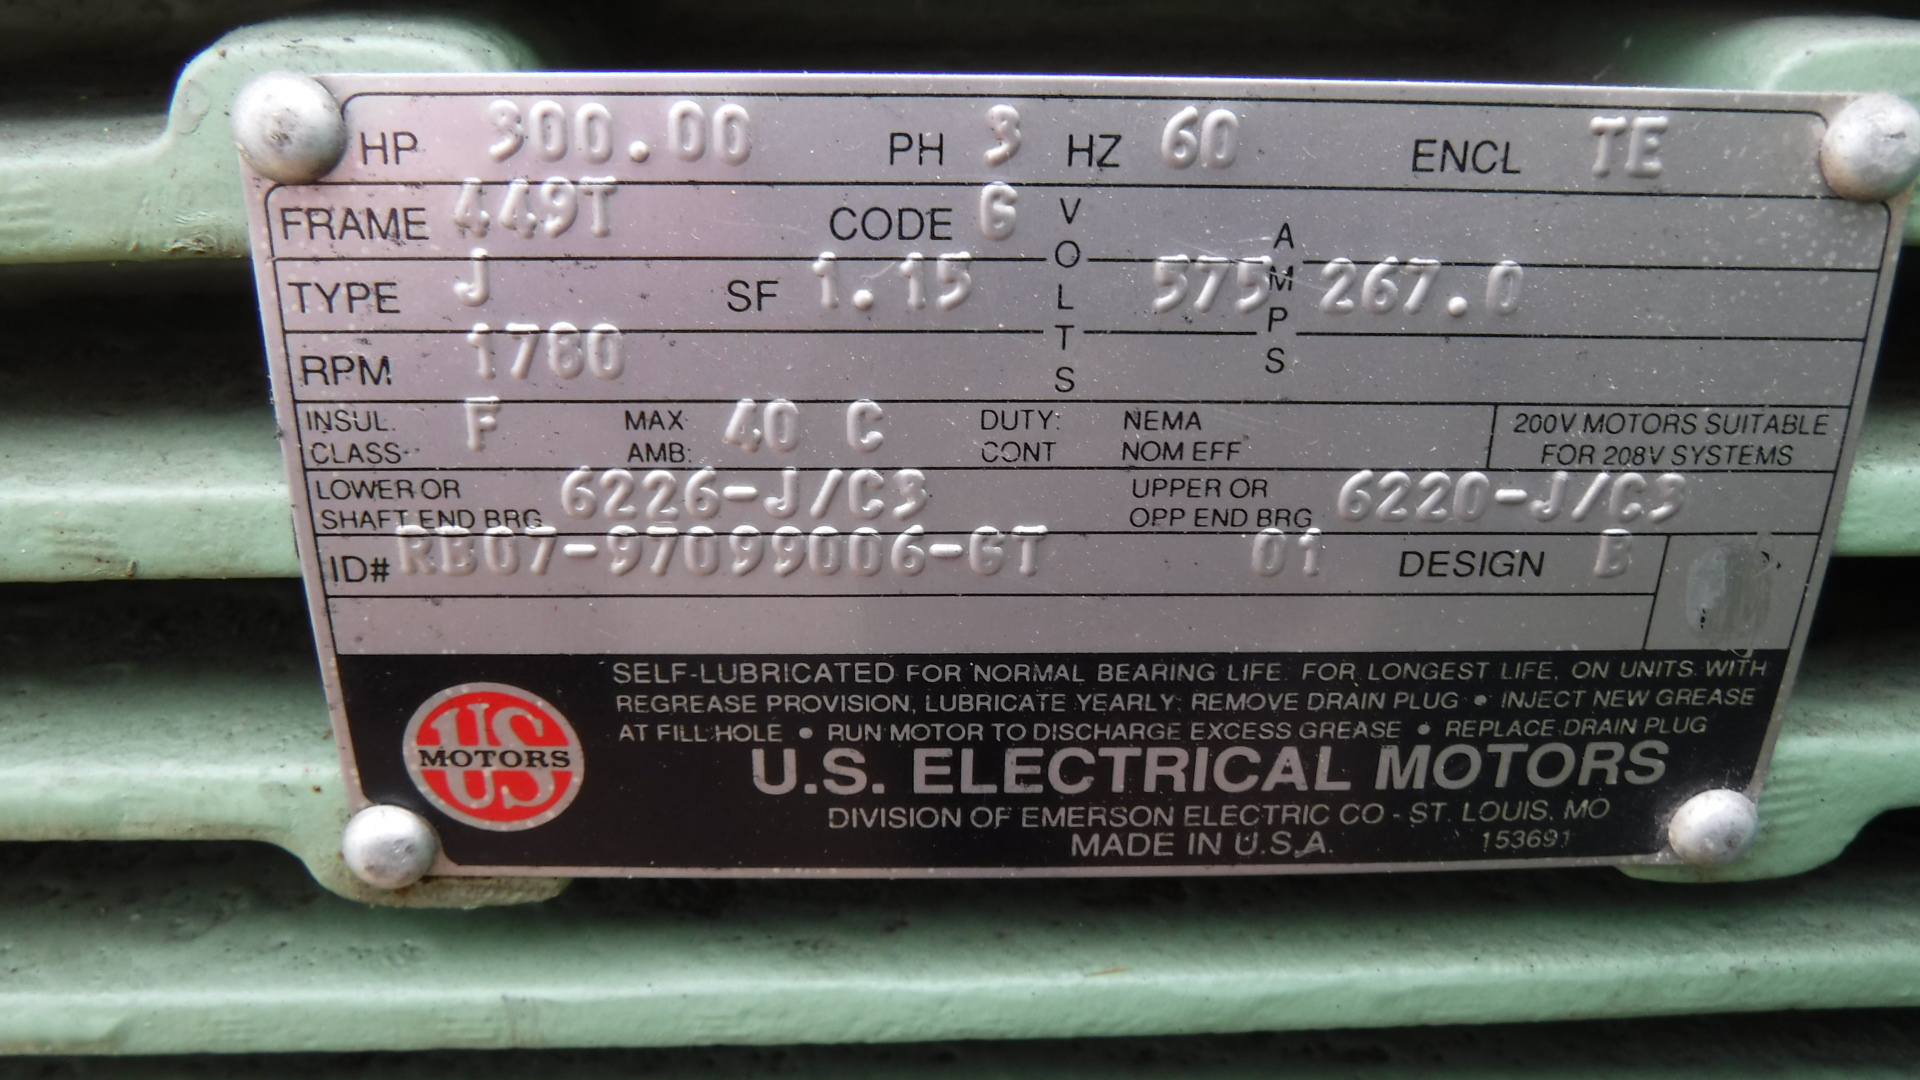 US Electric 300 HP 1800 RPM 449T Squirrel Cage Motors 75861